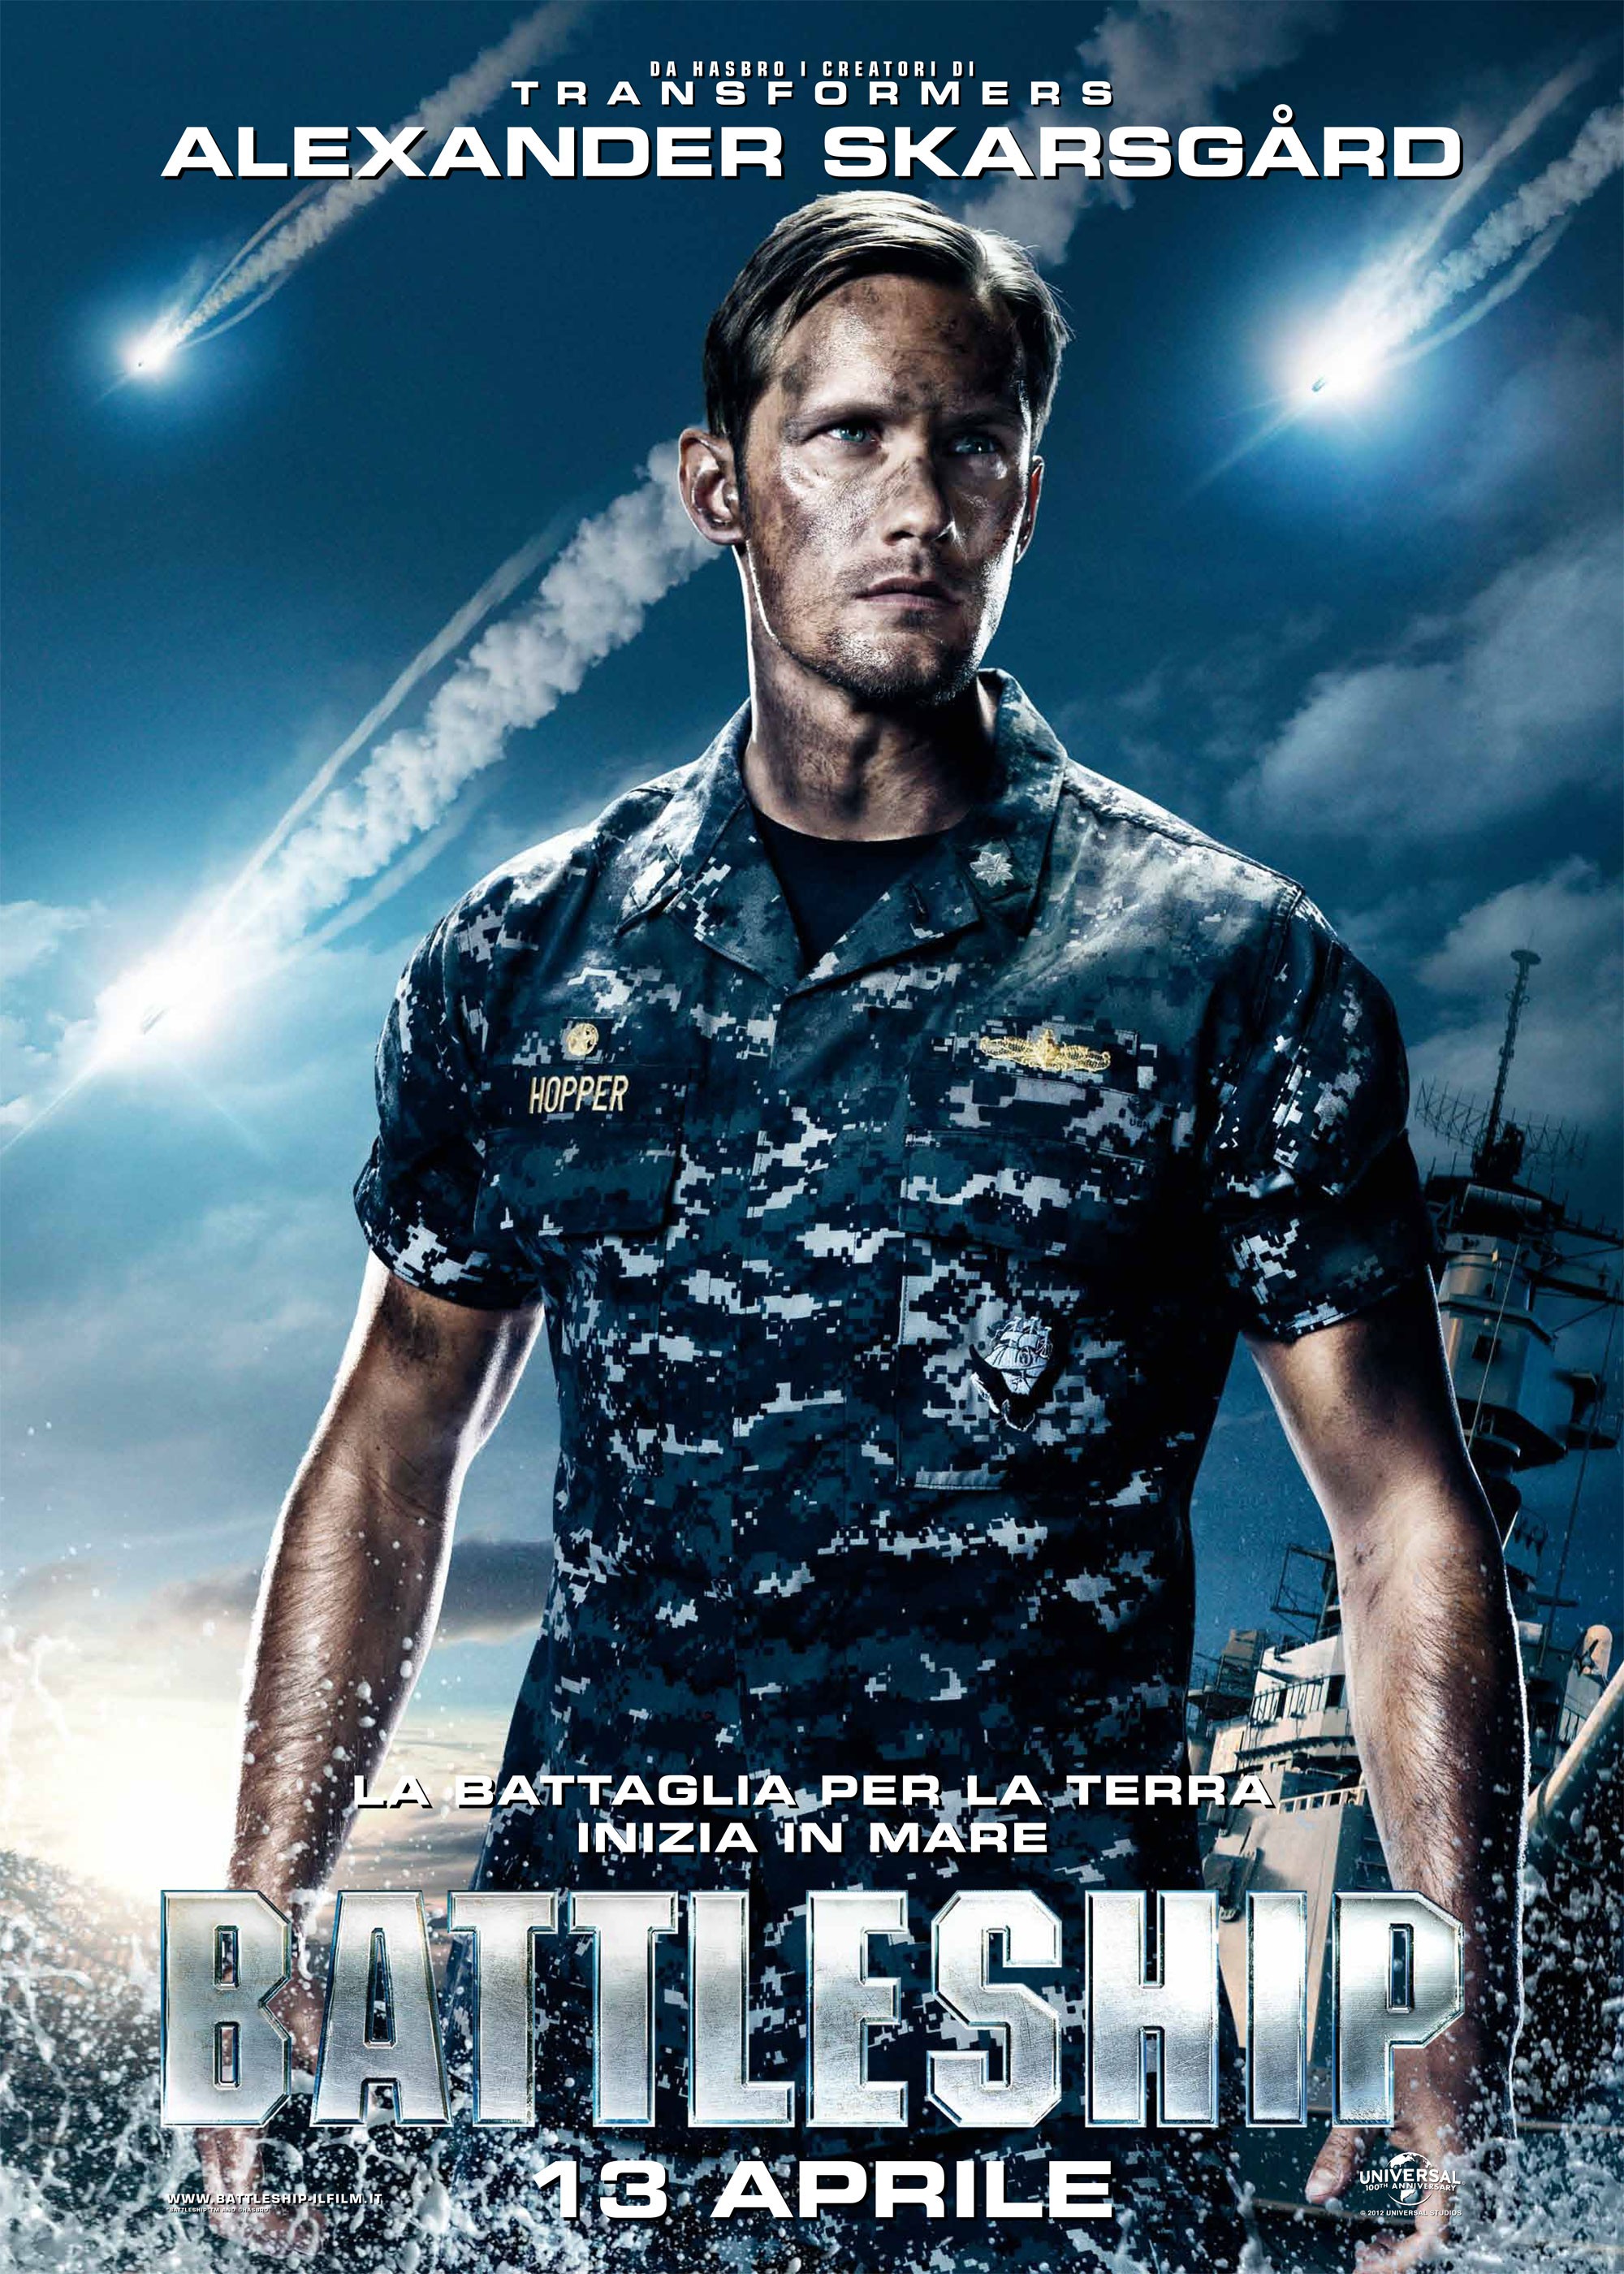 Mega Sized Movie Poster Image for Battleship